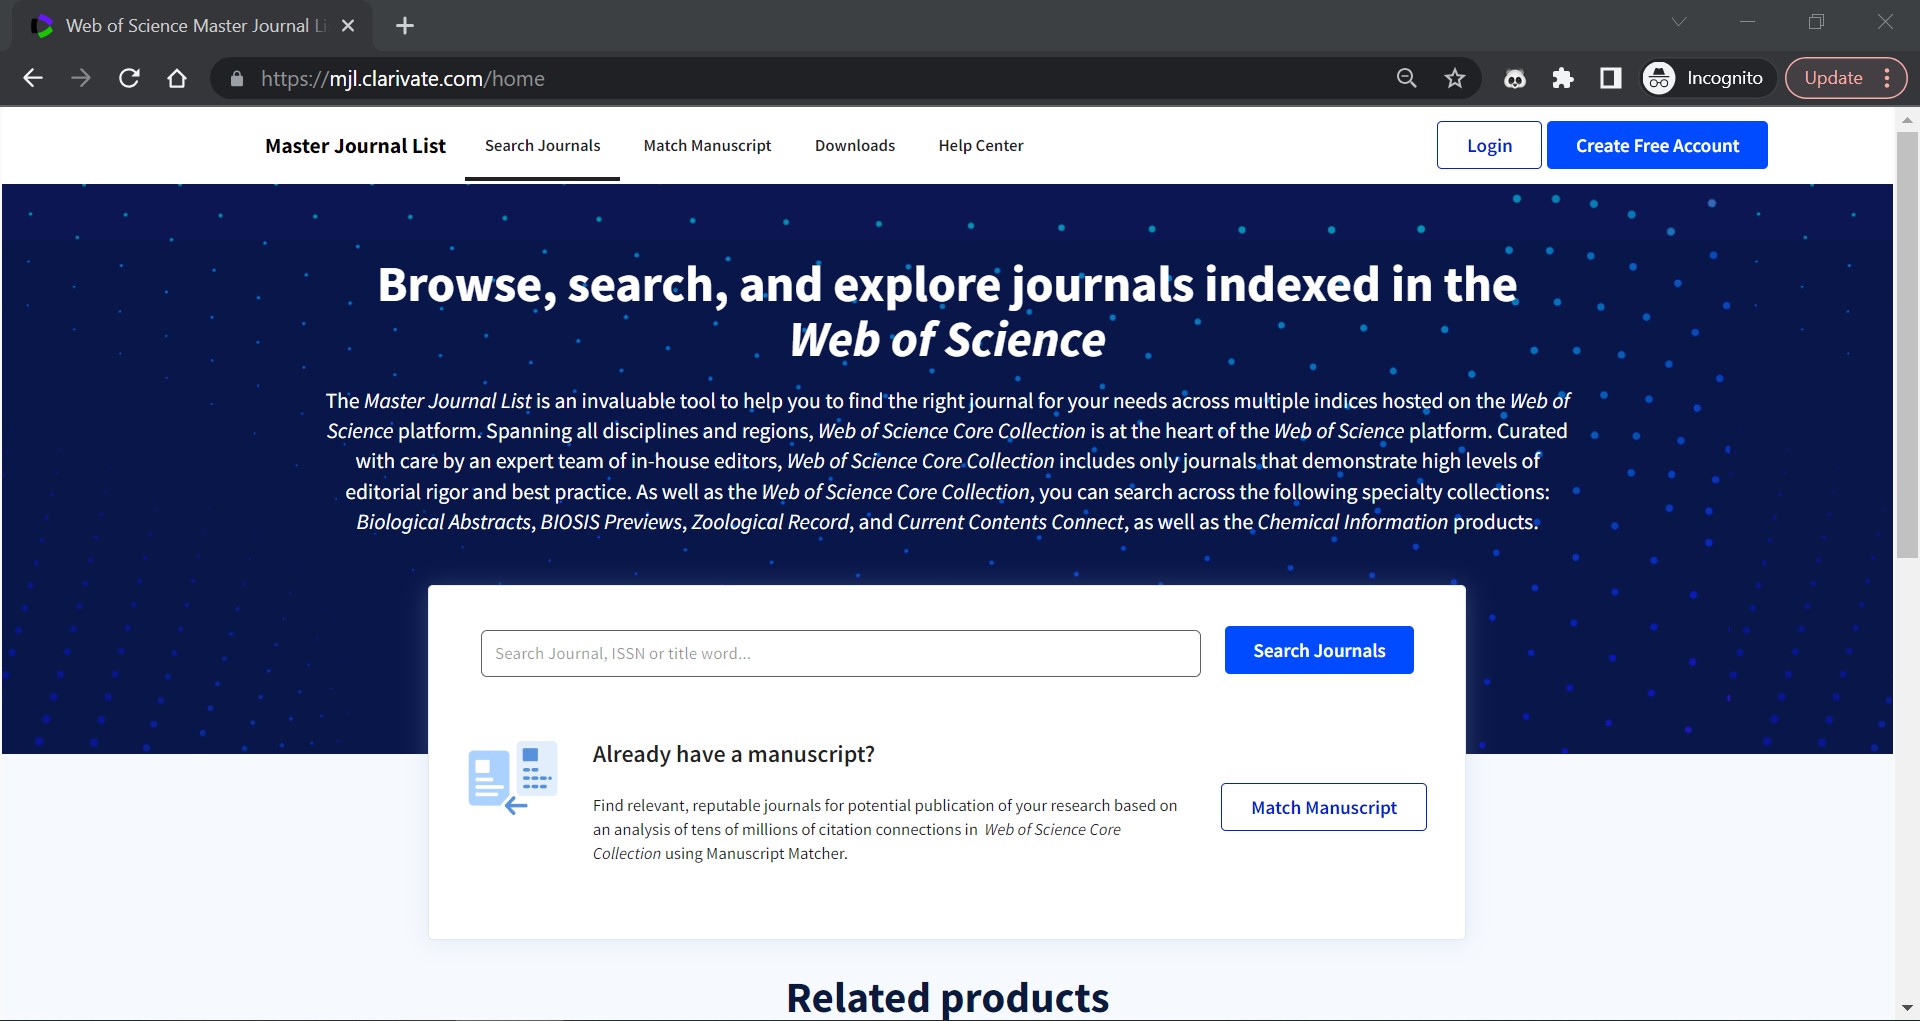 (Blog) วิธีการตรวจสอบรายชื่อวารสารว่ามีอยู่ในฐานข้อมูล Web of Science หรือไม่ด้วย Web of Science Master Journal List